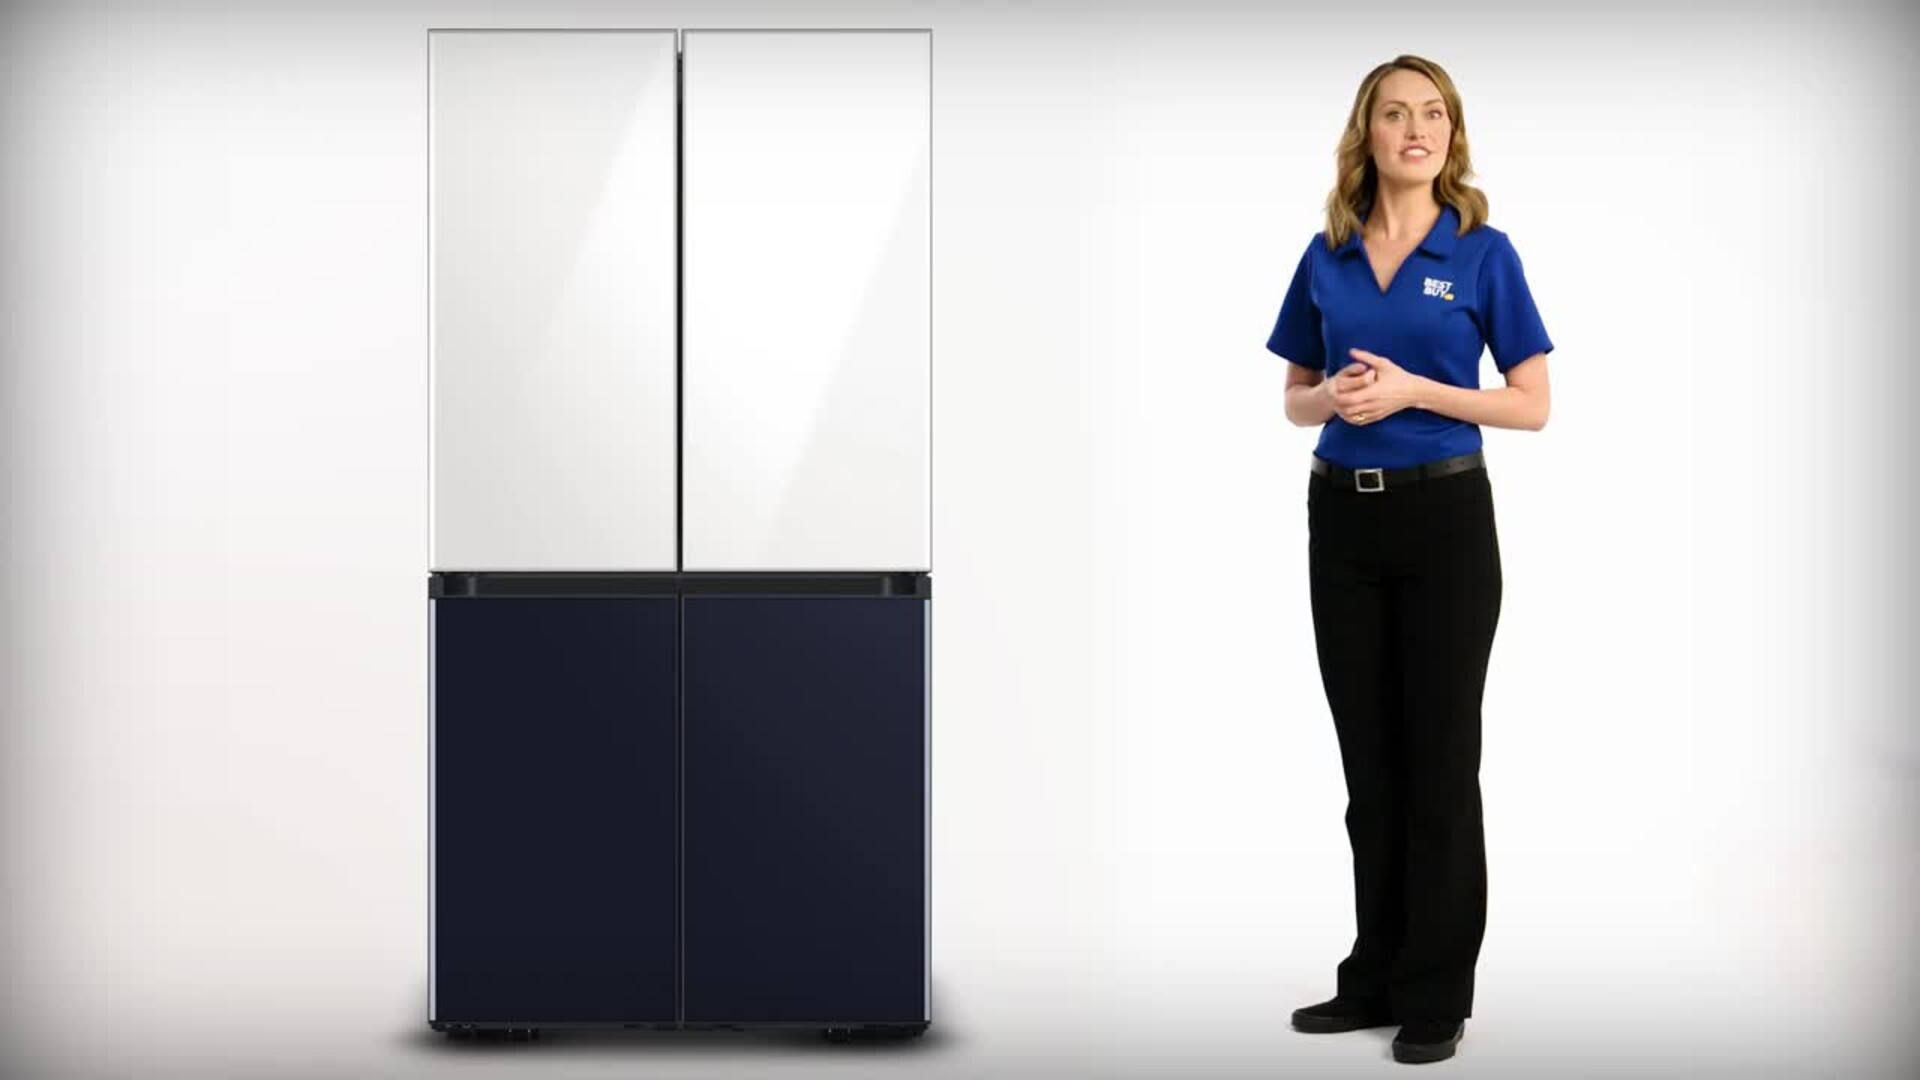 Réfrigérateur Samsung 384 L No Frost RT50K5152WW Blanc – Best Buy